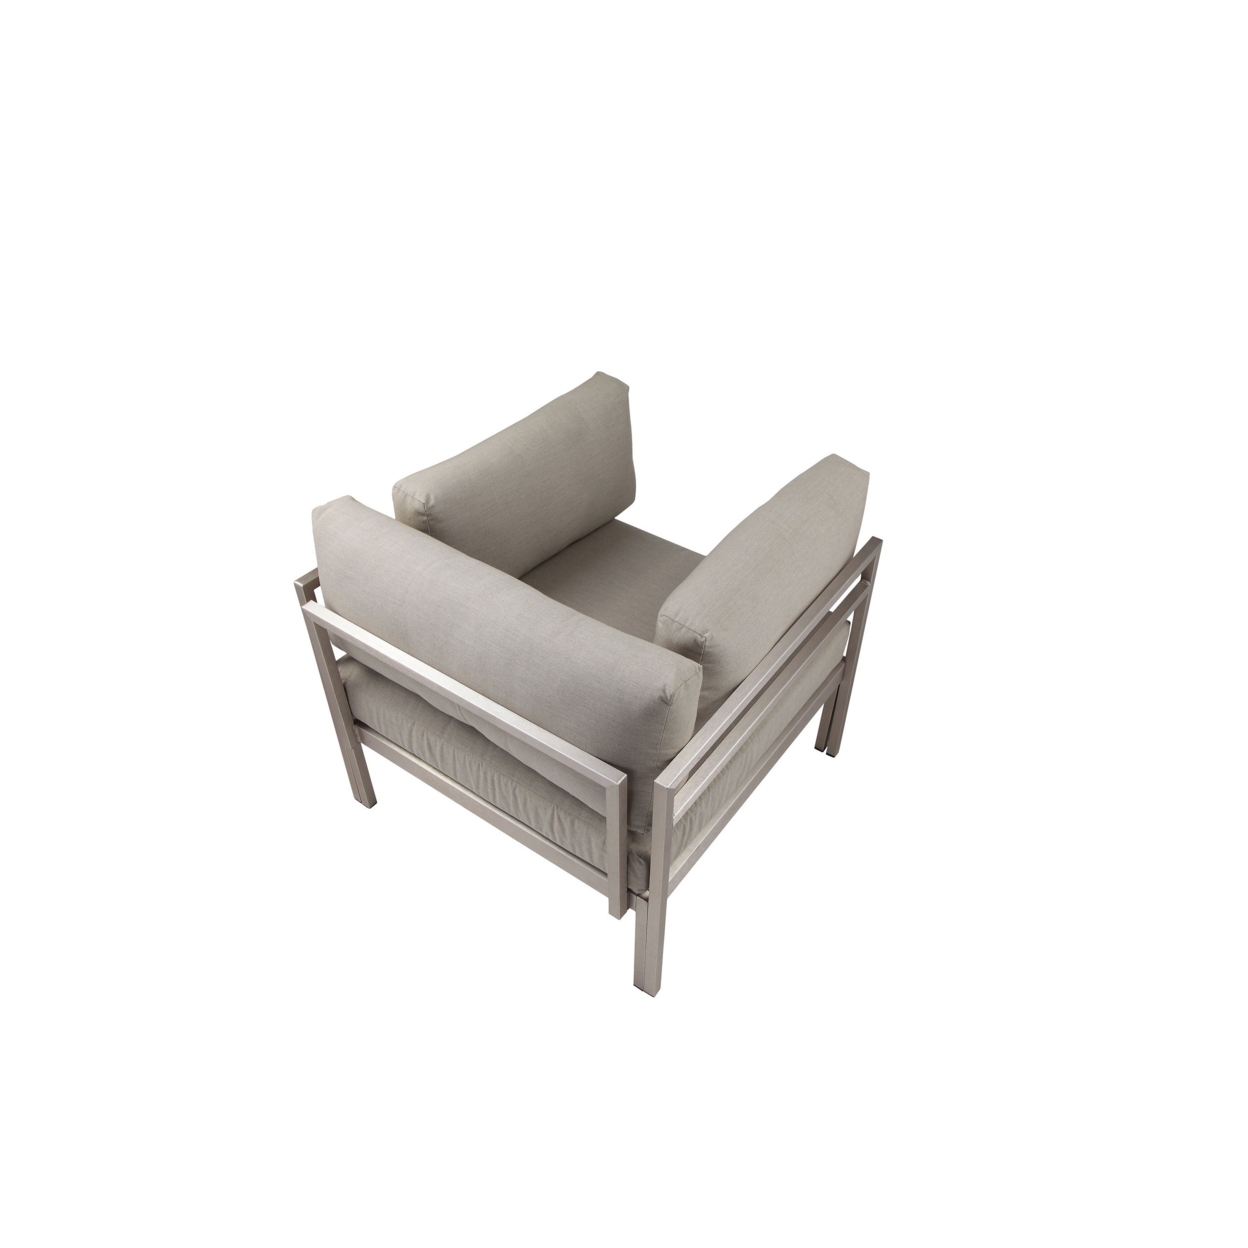 Cilo 34 Inch Outdoor Armchair, Gray Aluminum, Water Resistant Cushions- Saltoro Sherpi